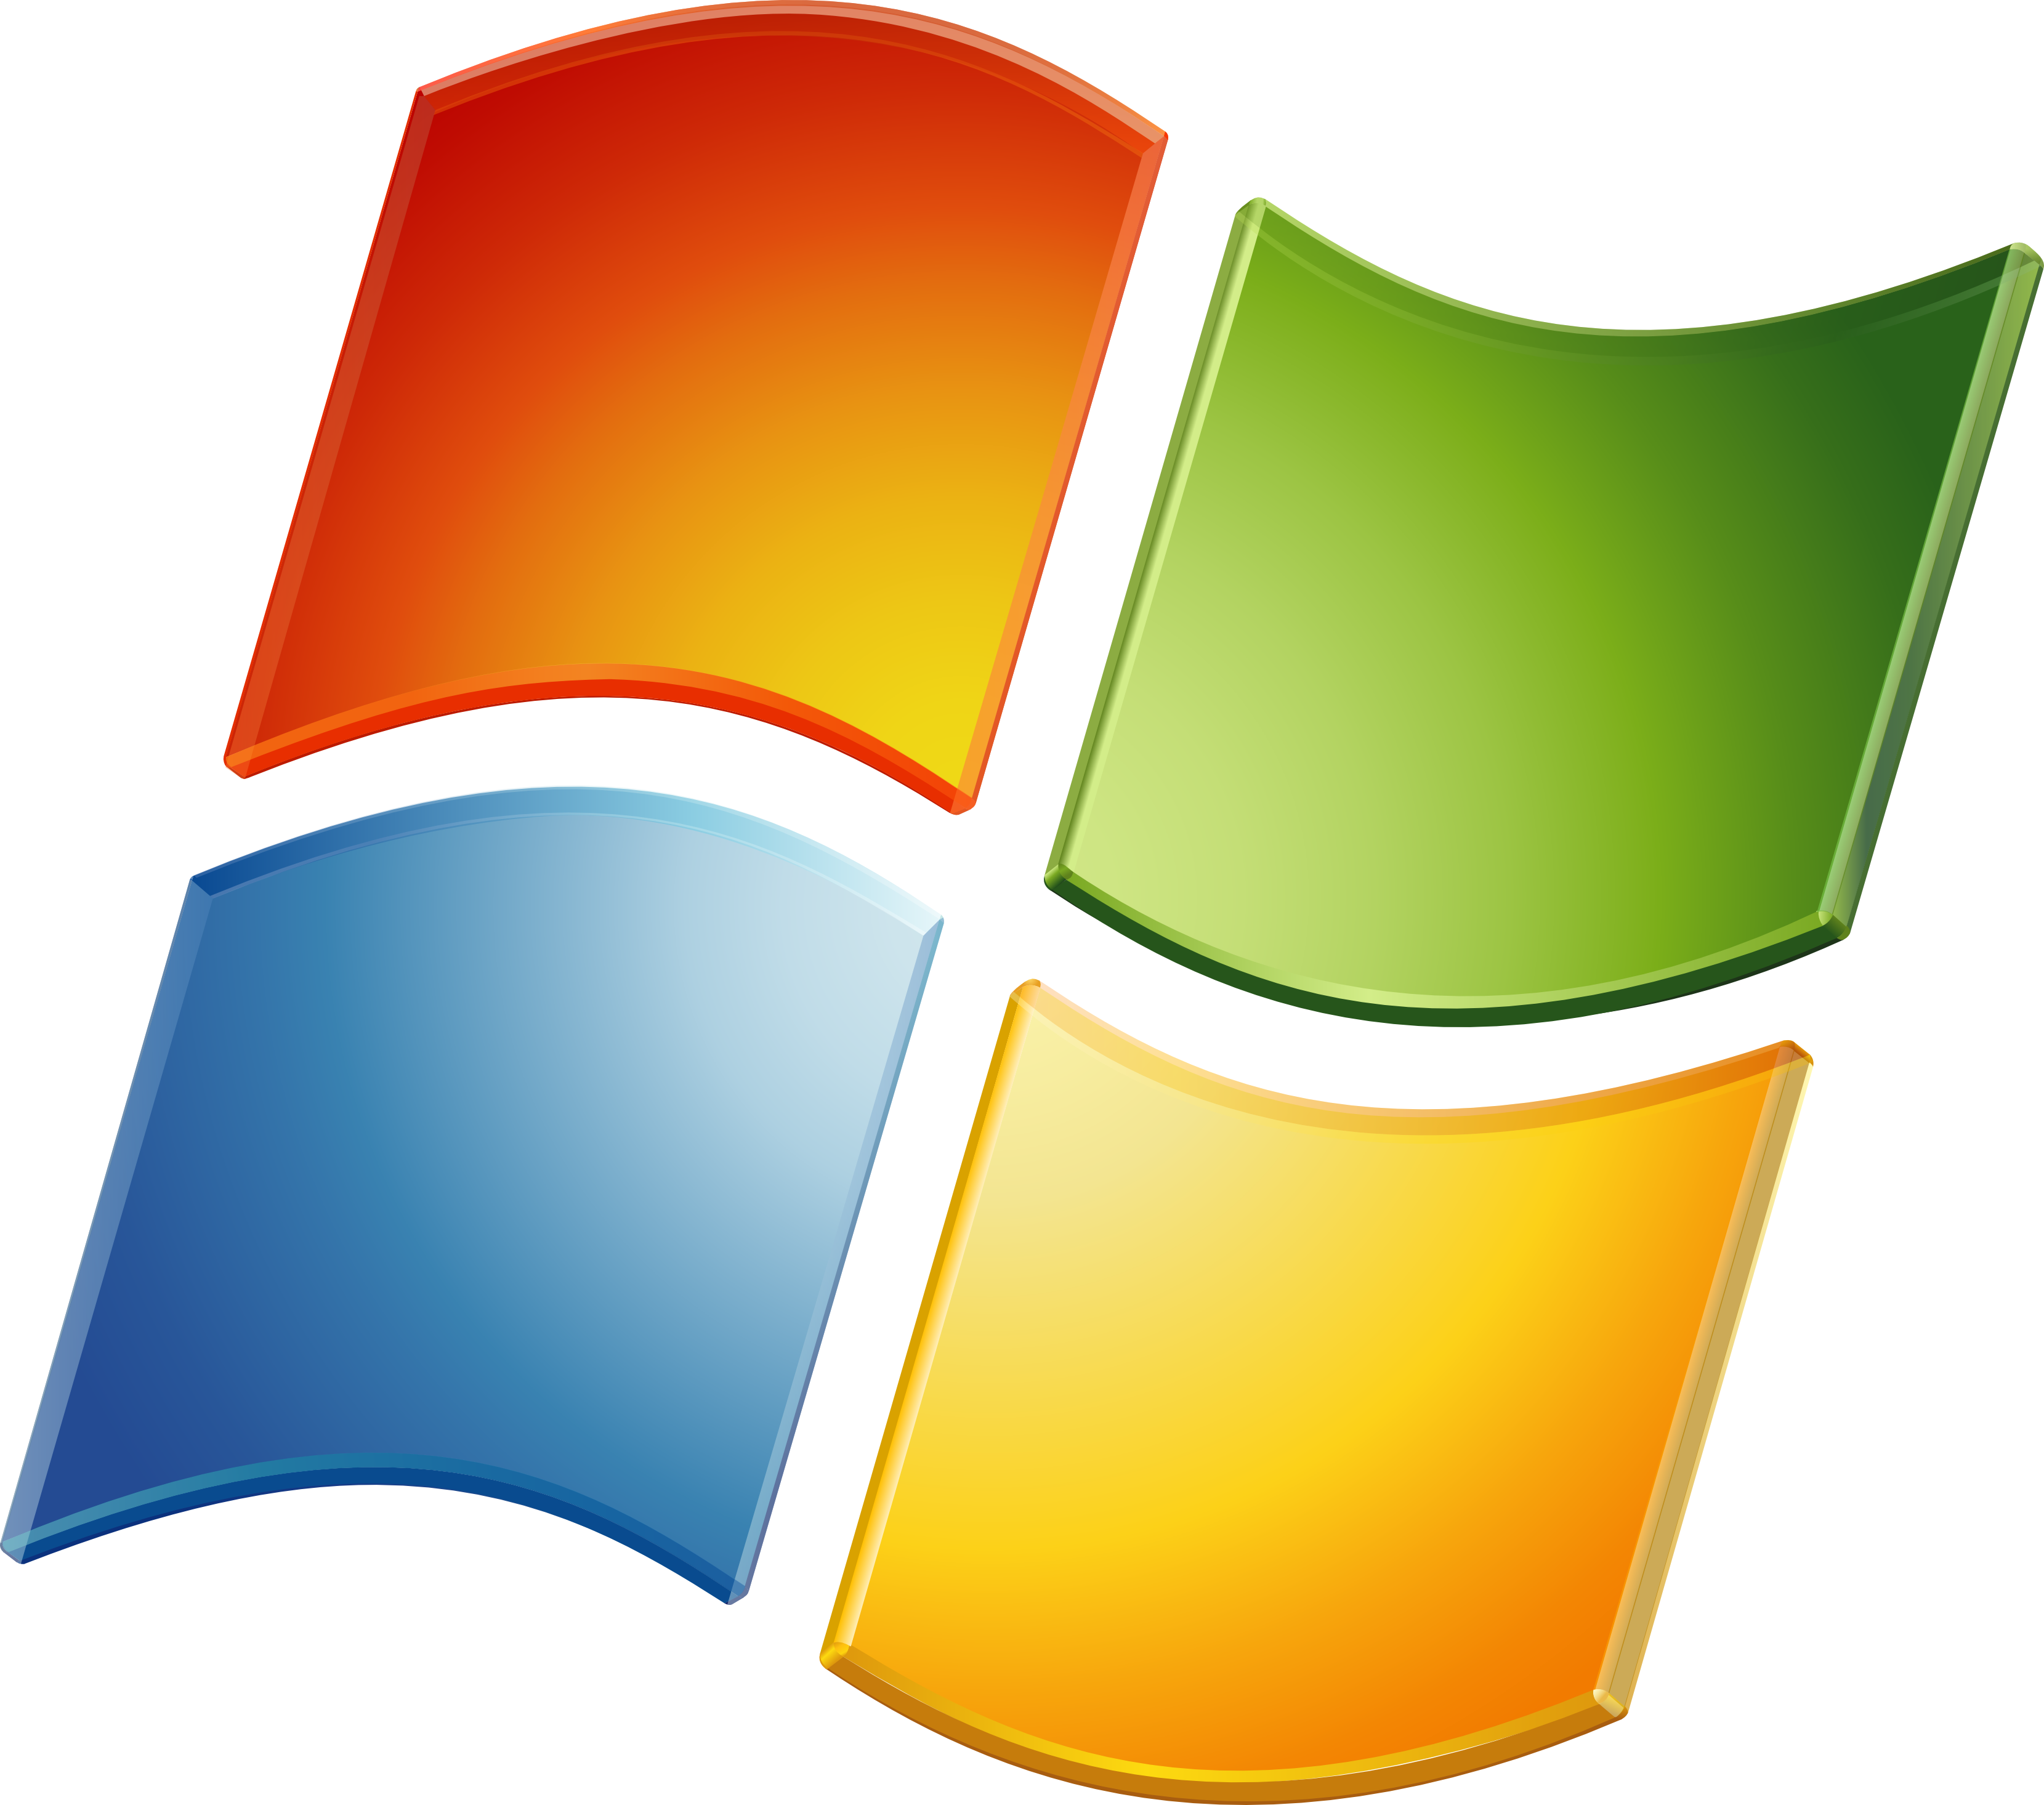 Microsoft Logo PNG Transparent